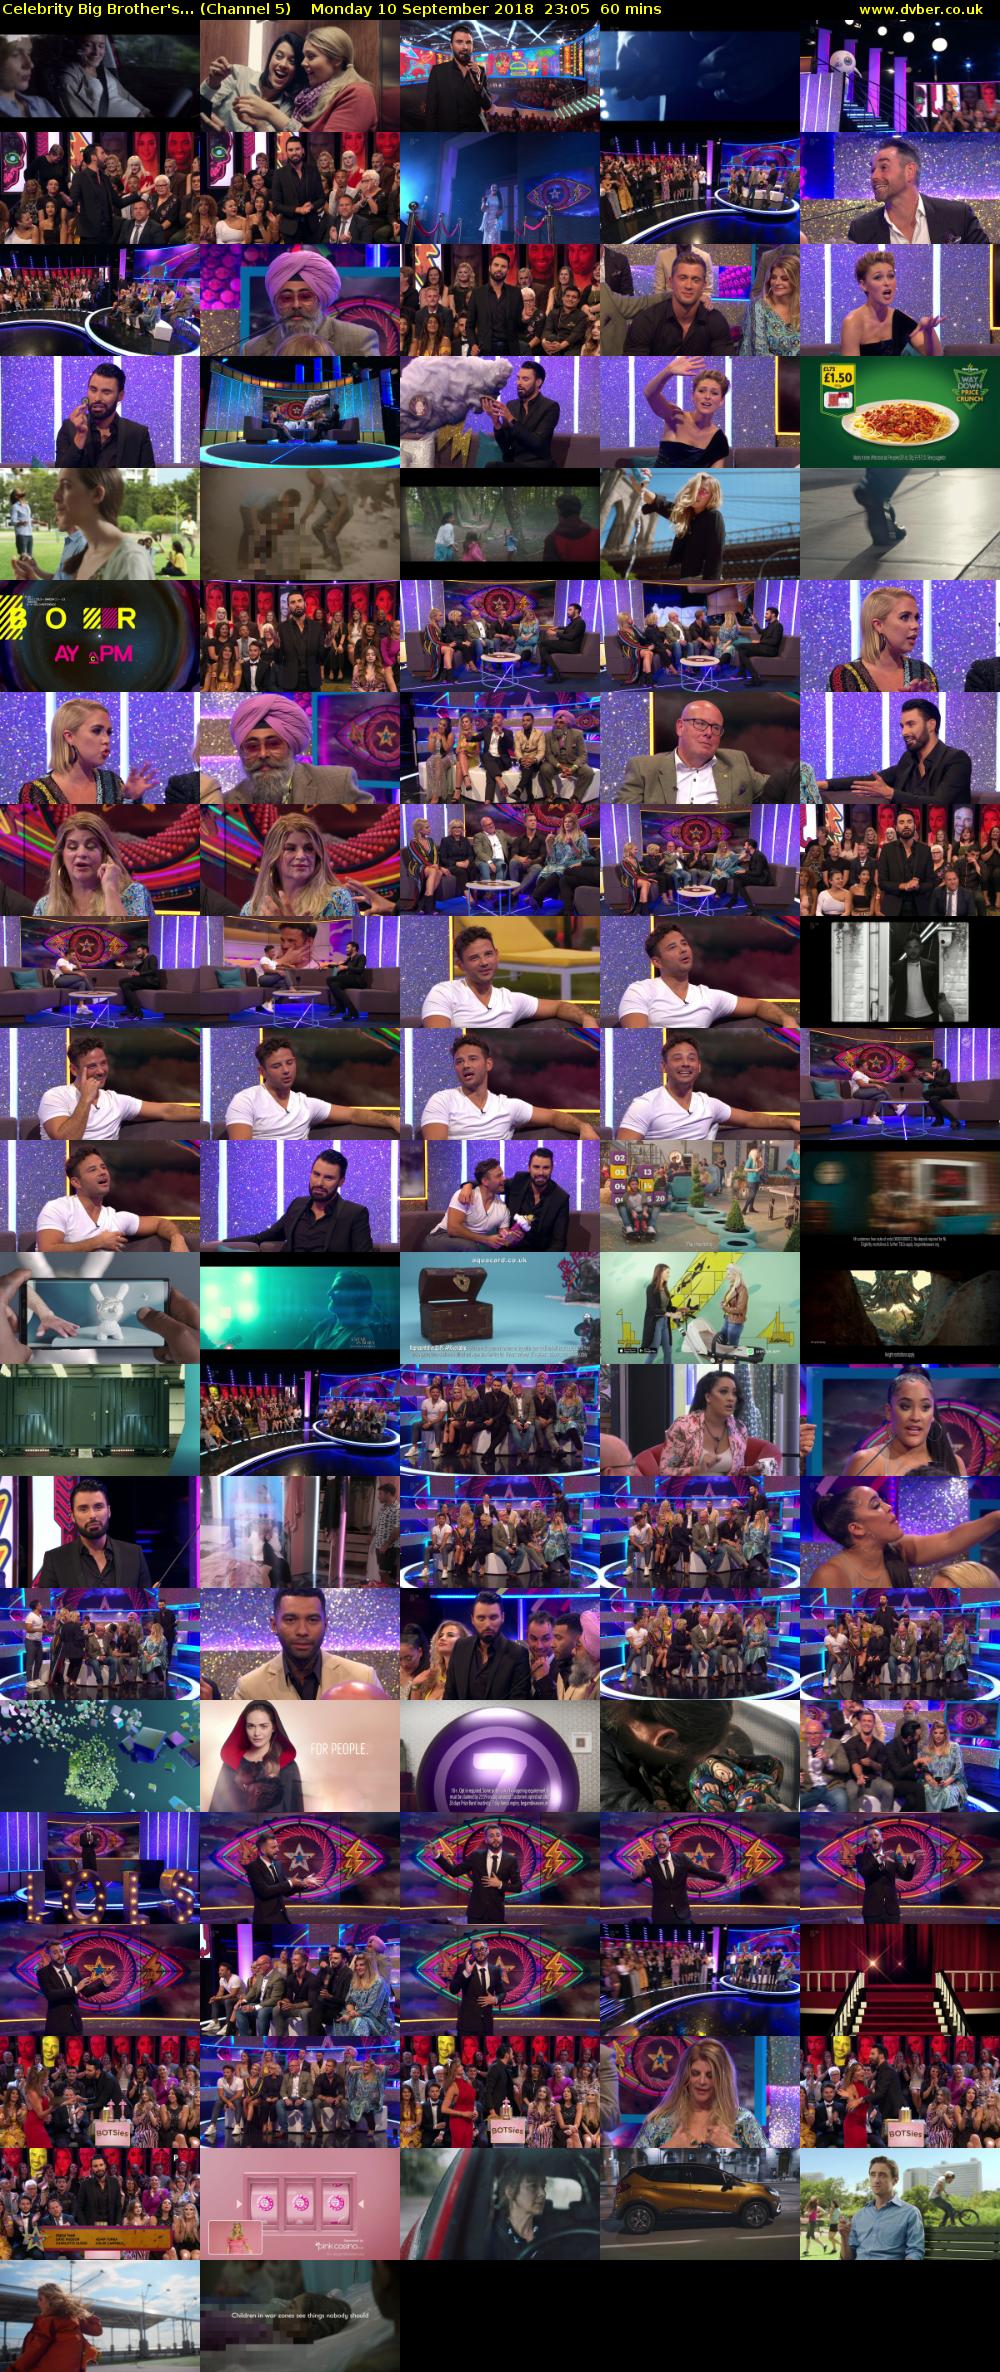 Celebrity Big Brother's... (Channel 5) Monday 10 September 2018 23:05 - 00:05